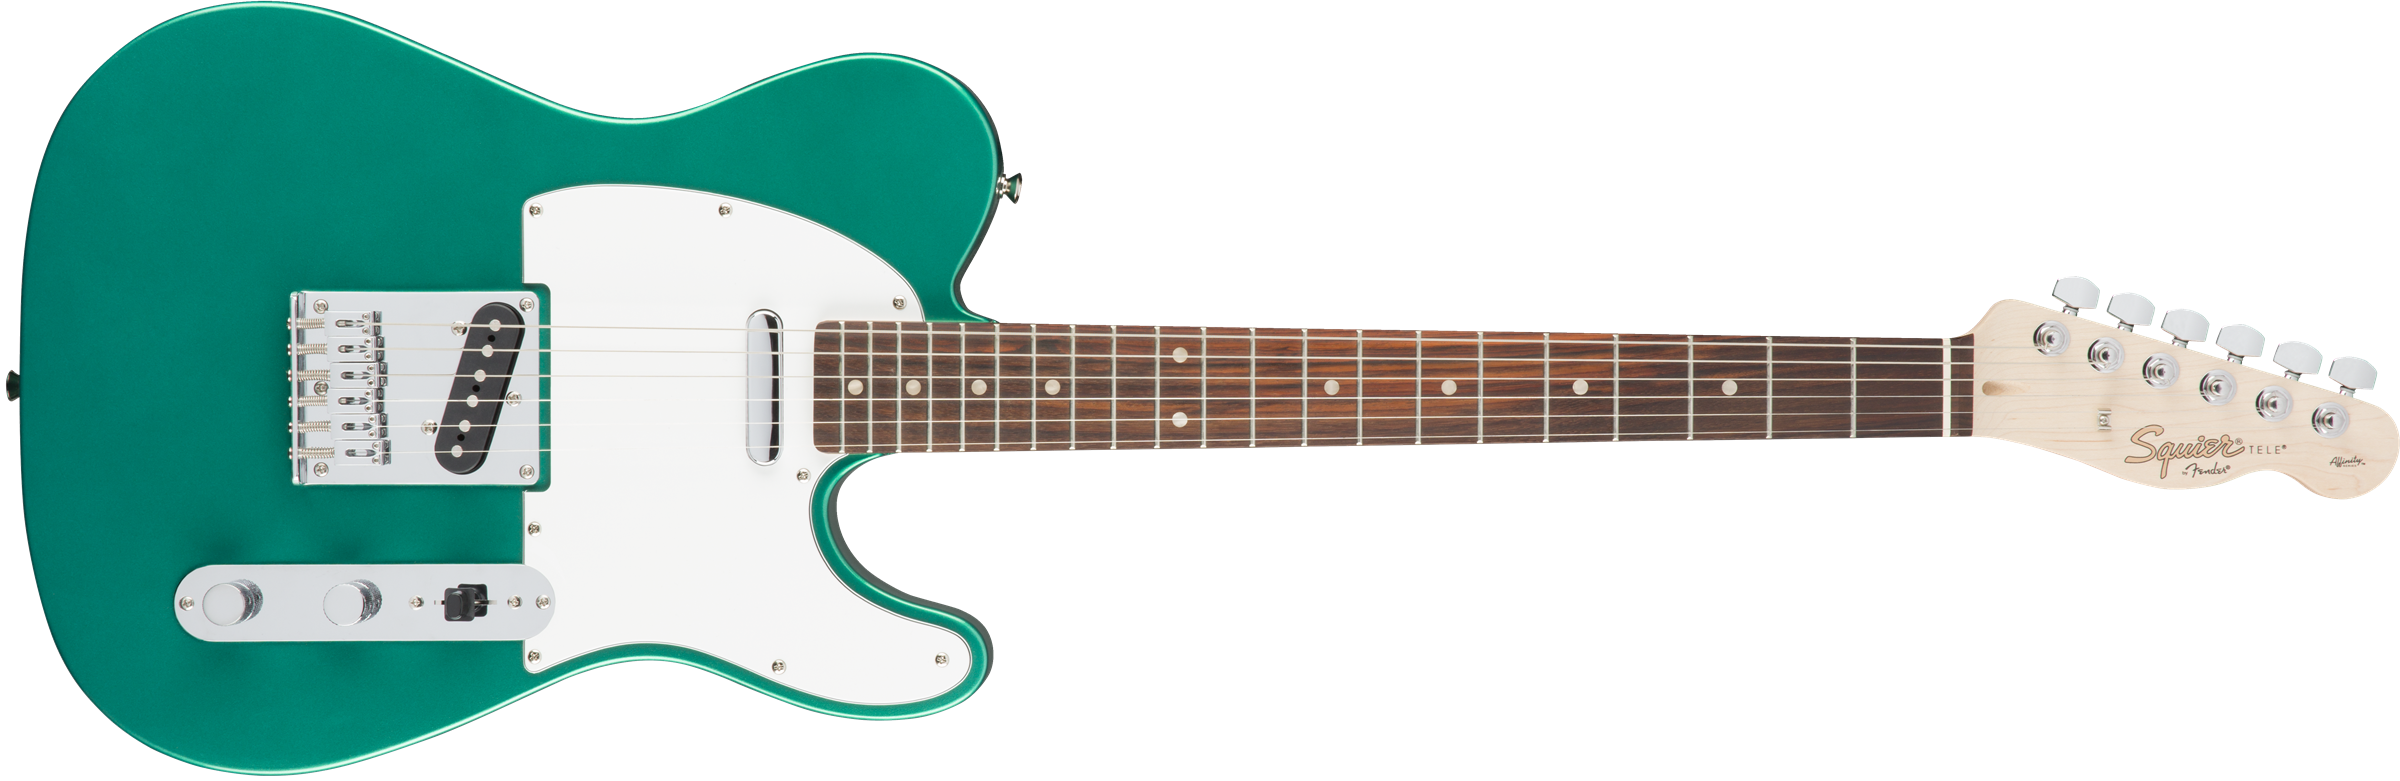 Squier Tele Affinity Series 2019 Lau - Race Green - Televorm elektrische gitaar - Variation 1